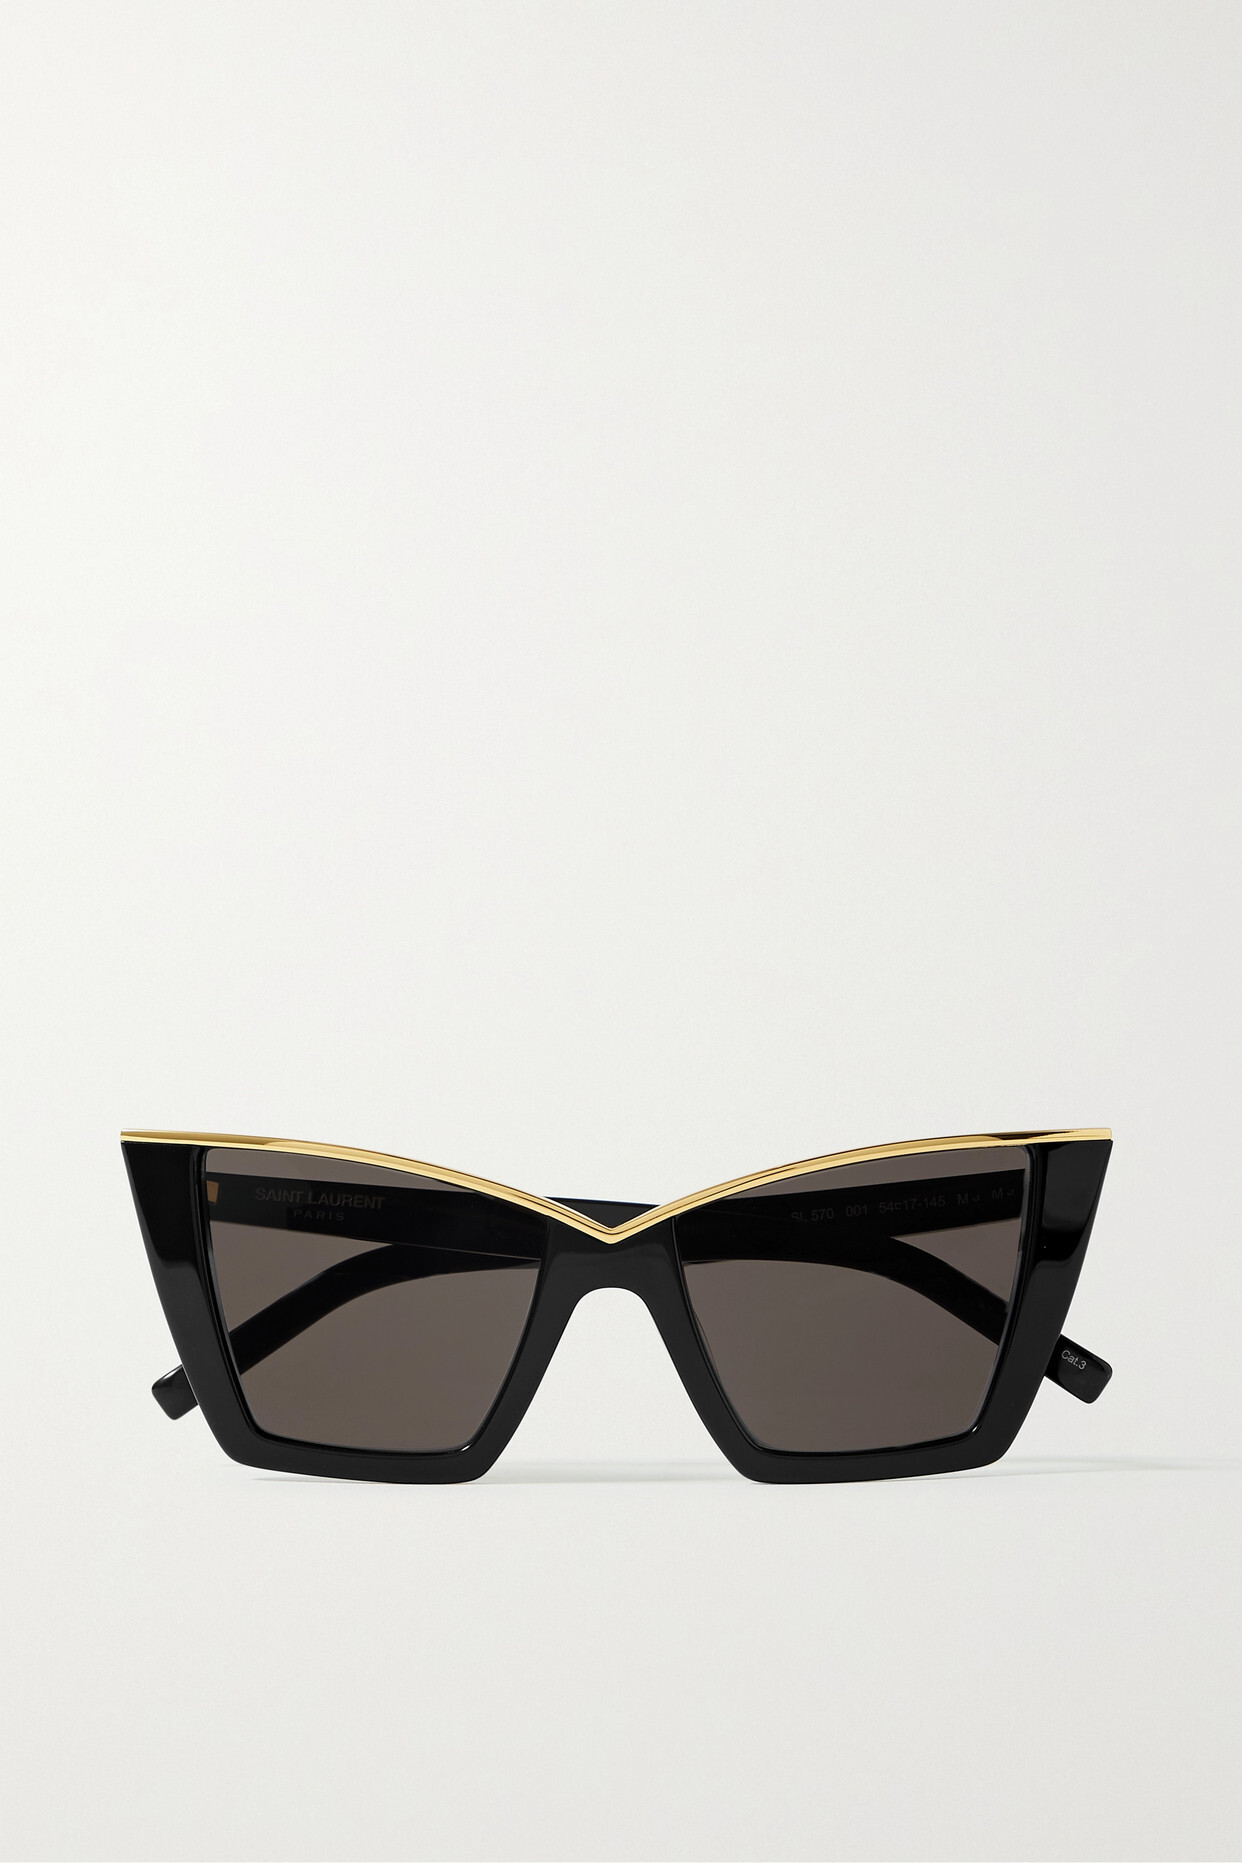 SAINT LAURENT Eyewear - Cat-eye Acetate And Gold-tone Sunglasses - Black